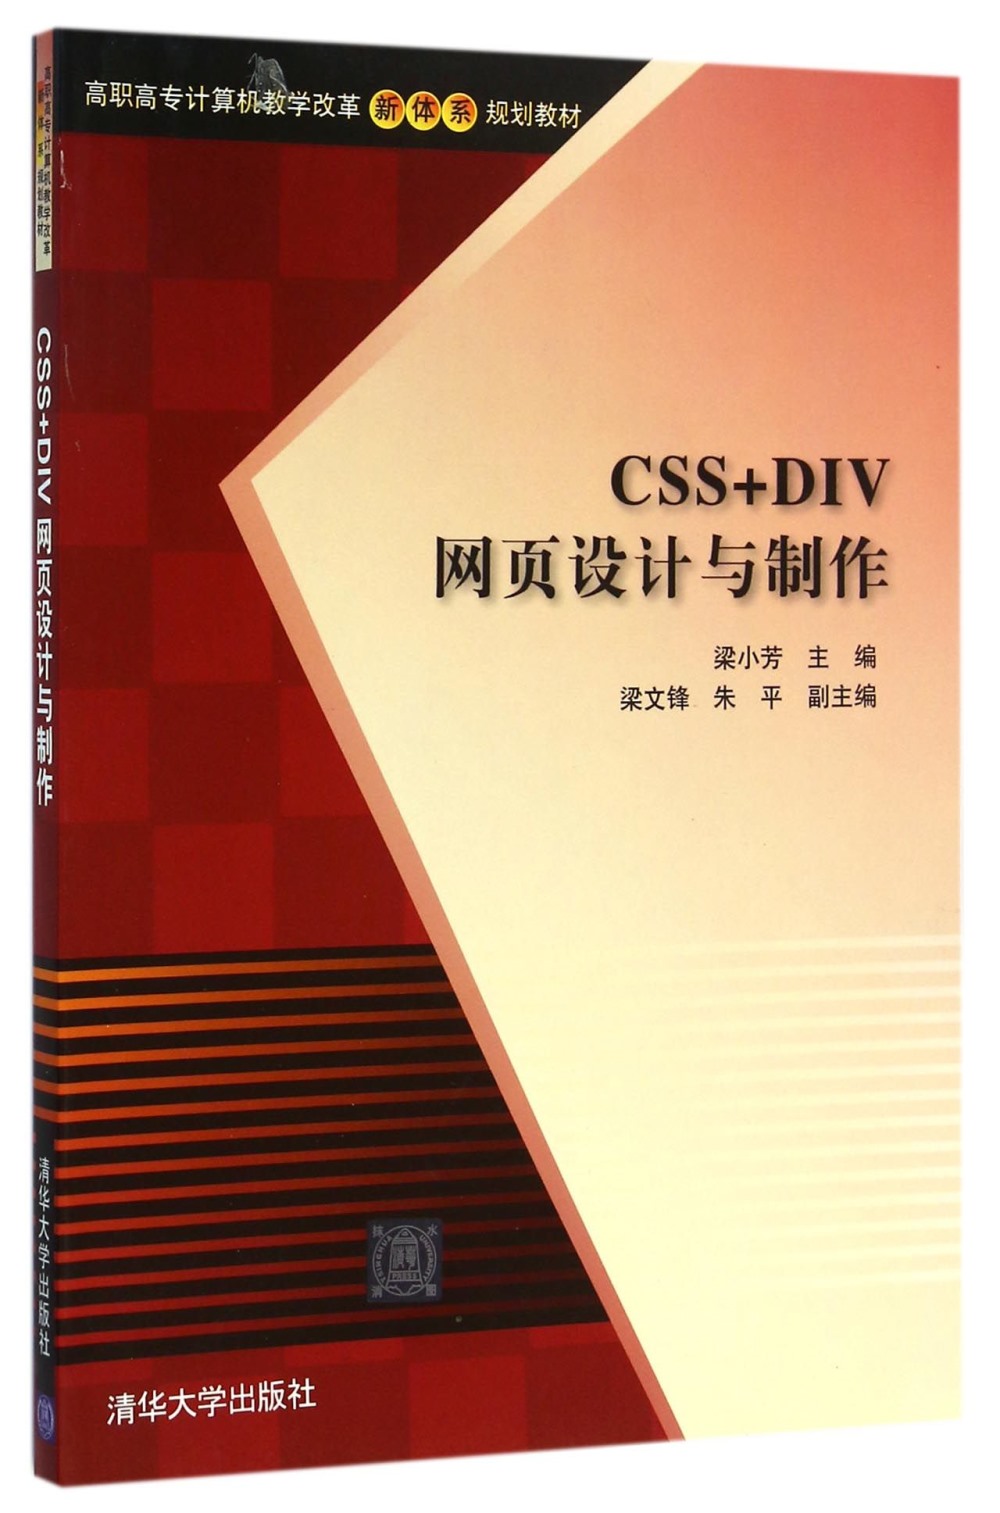 CSS+DIV網頁設計與制作